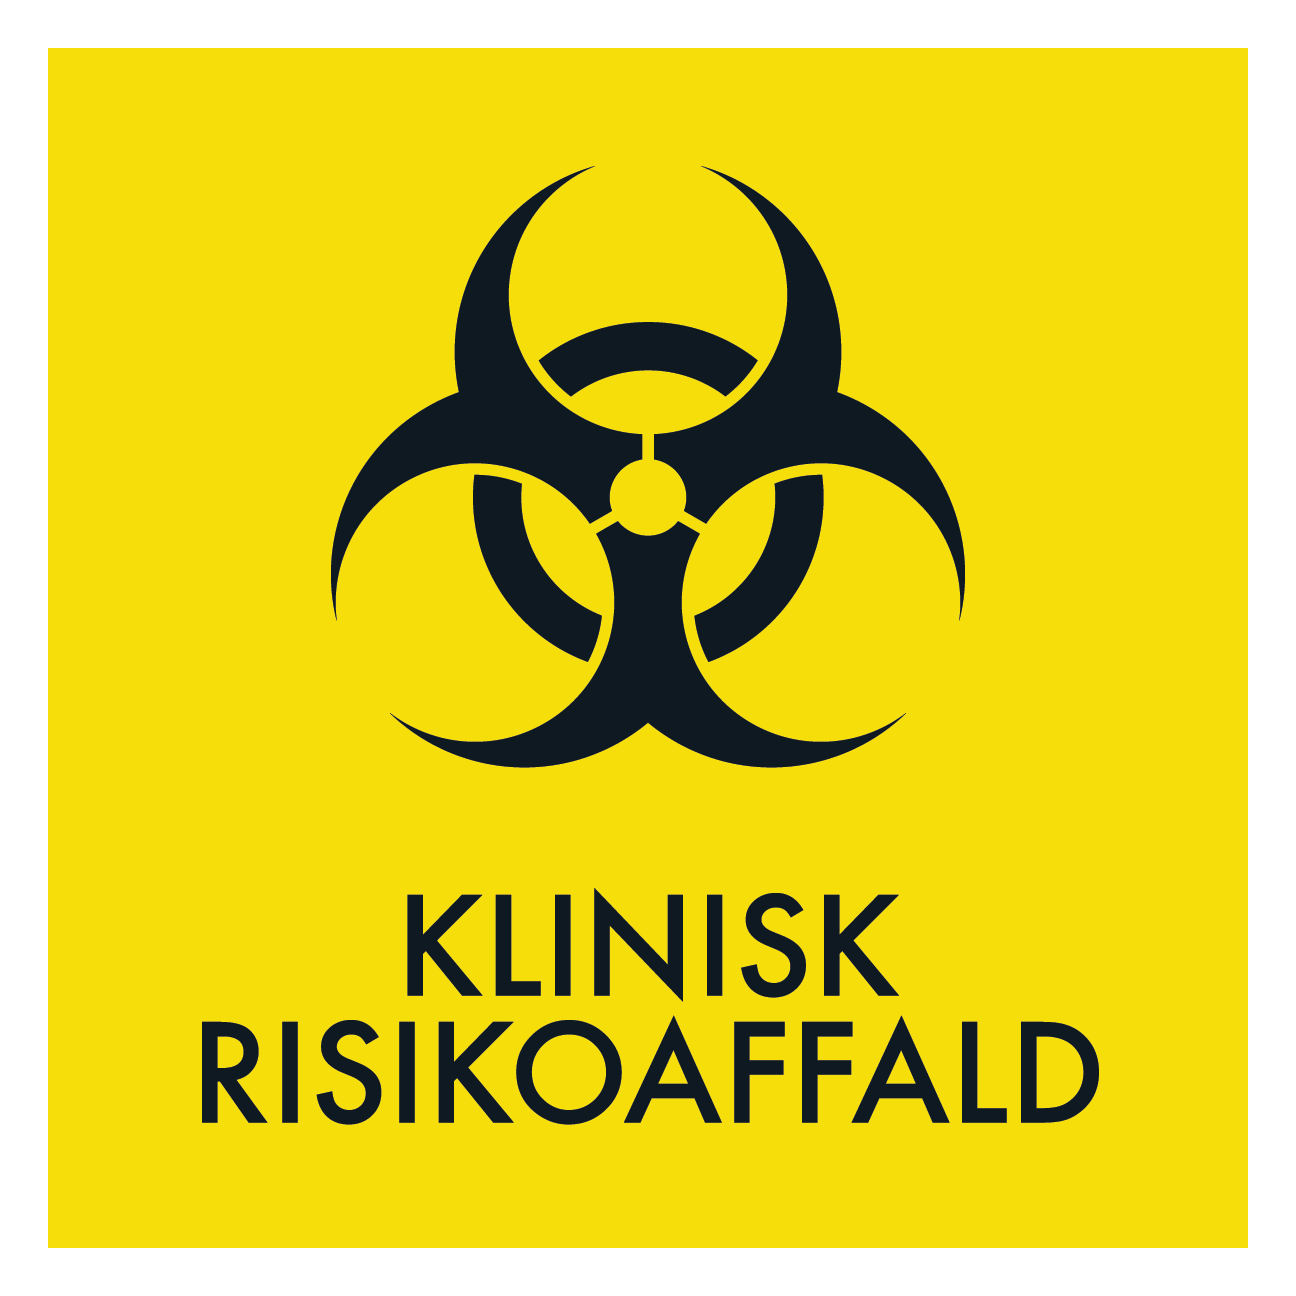 Klinisk risikoaffald skilt - Dansk Affaldssortering